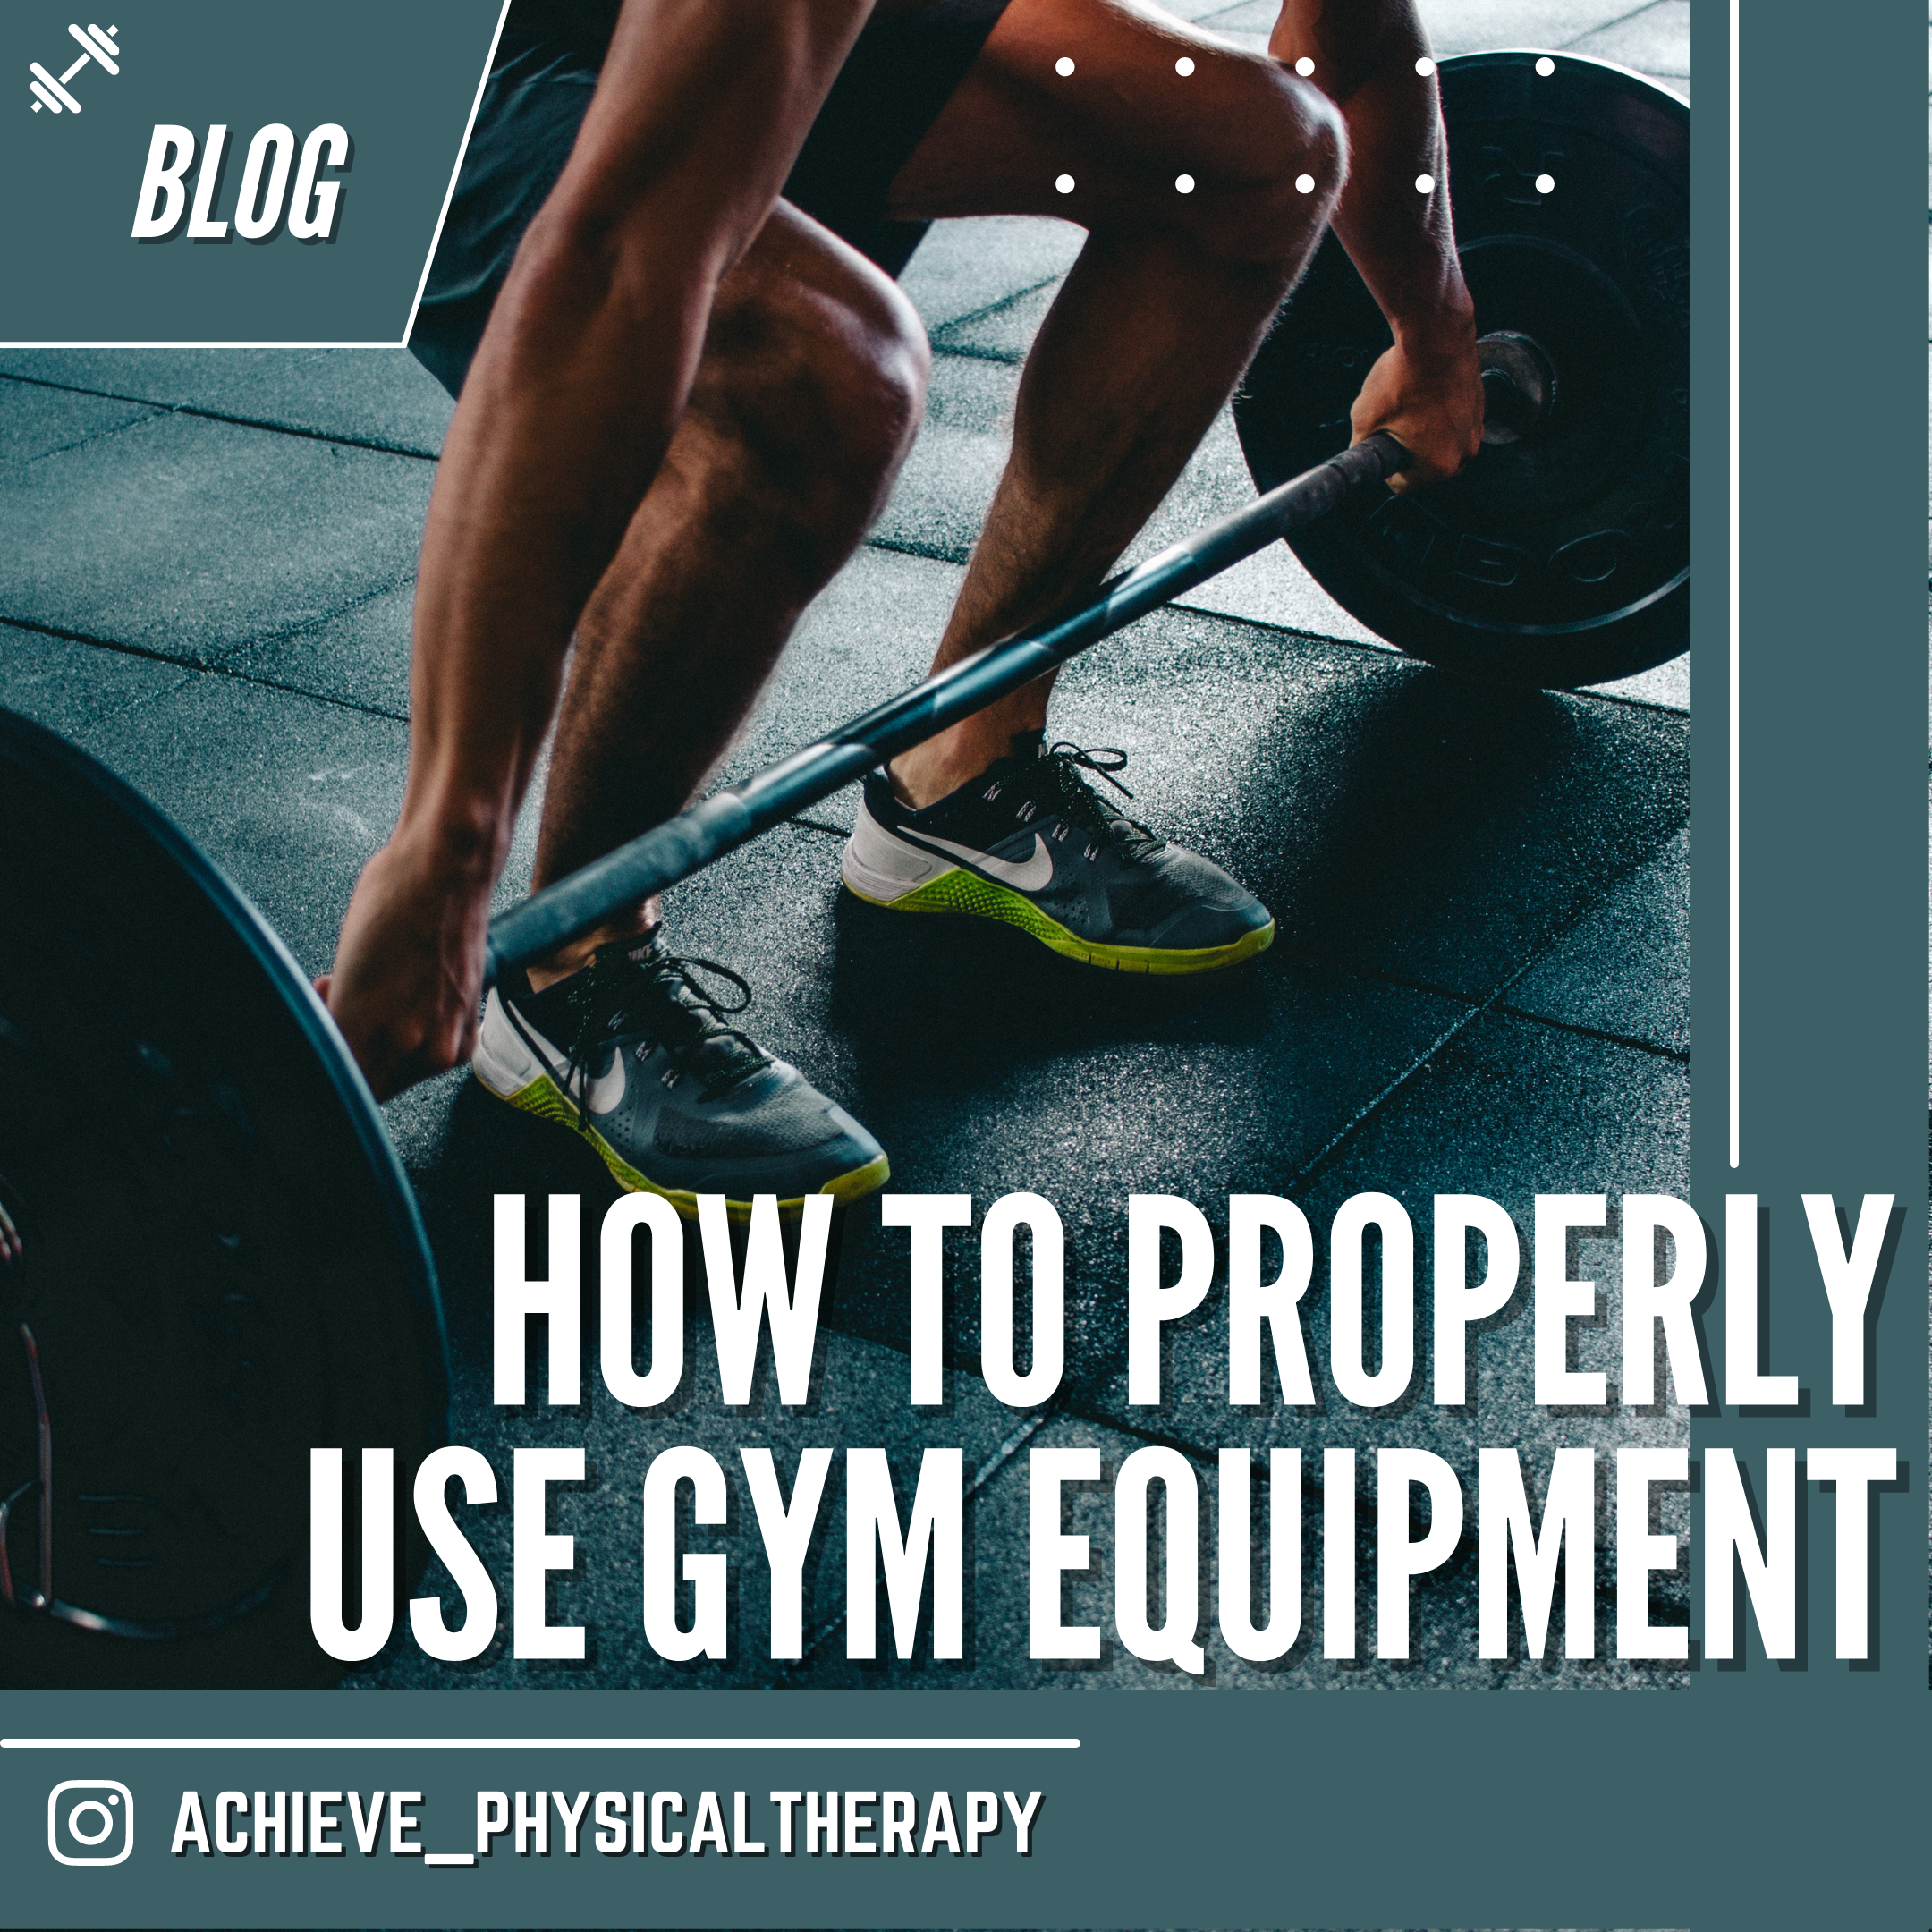 Properly Using Gym Equipment, gym equipment, tips for strength training, gym equipment usage, strength training